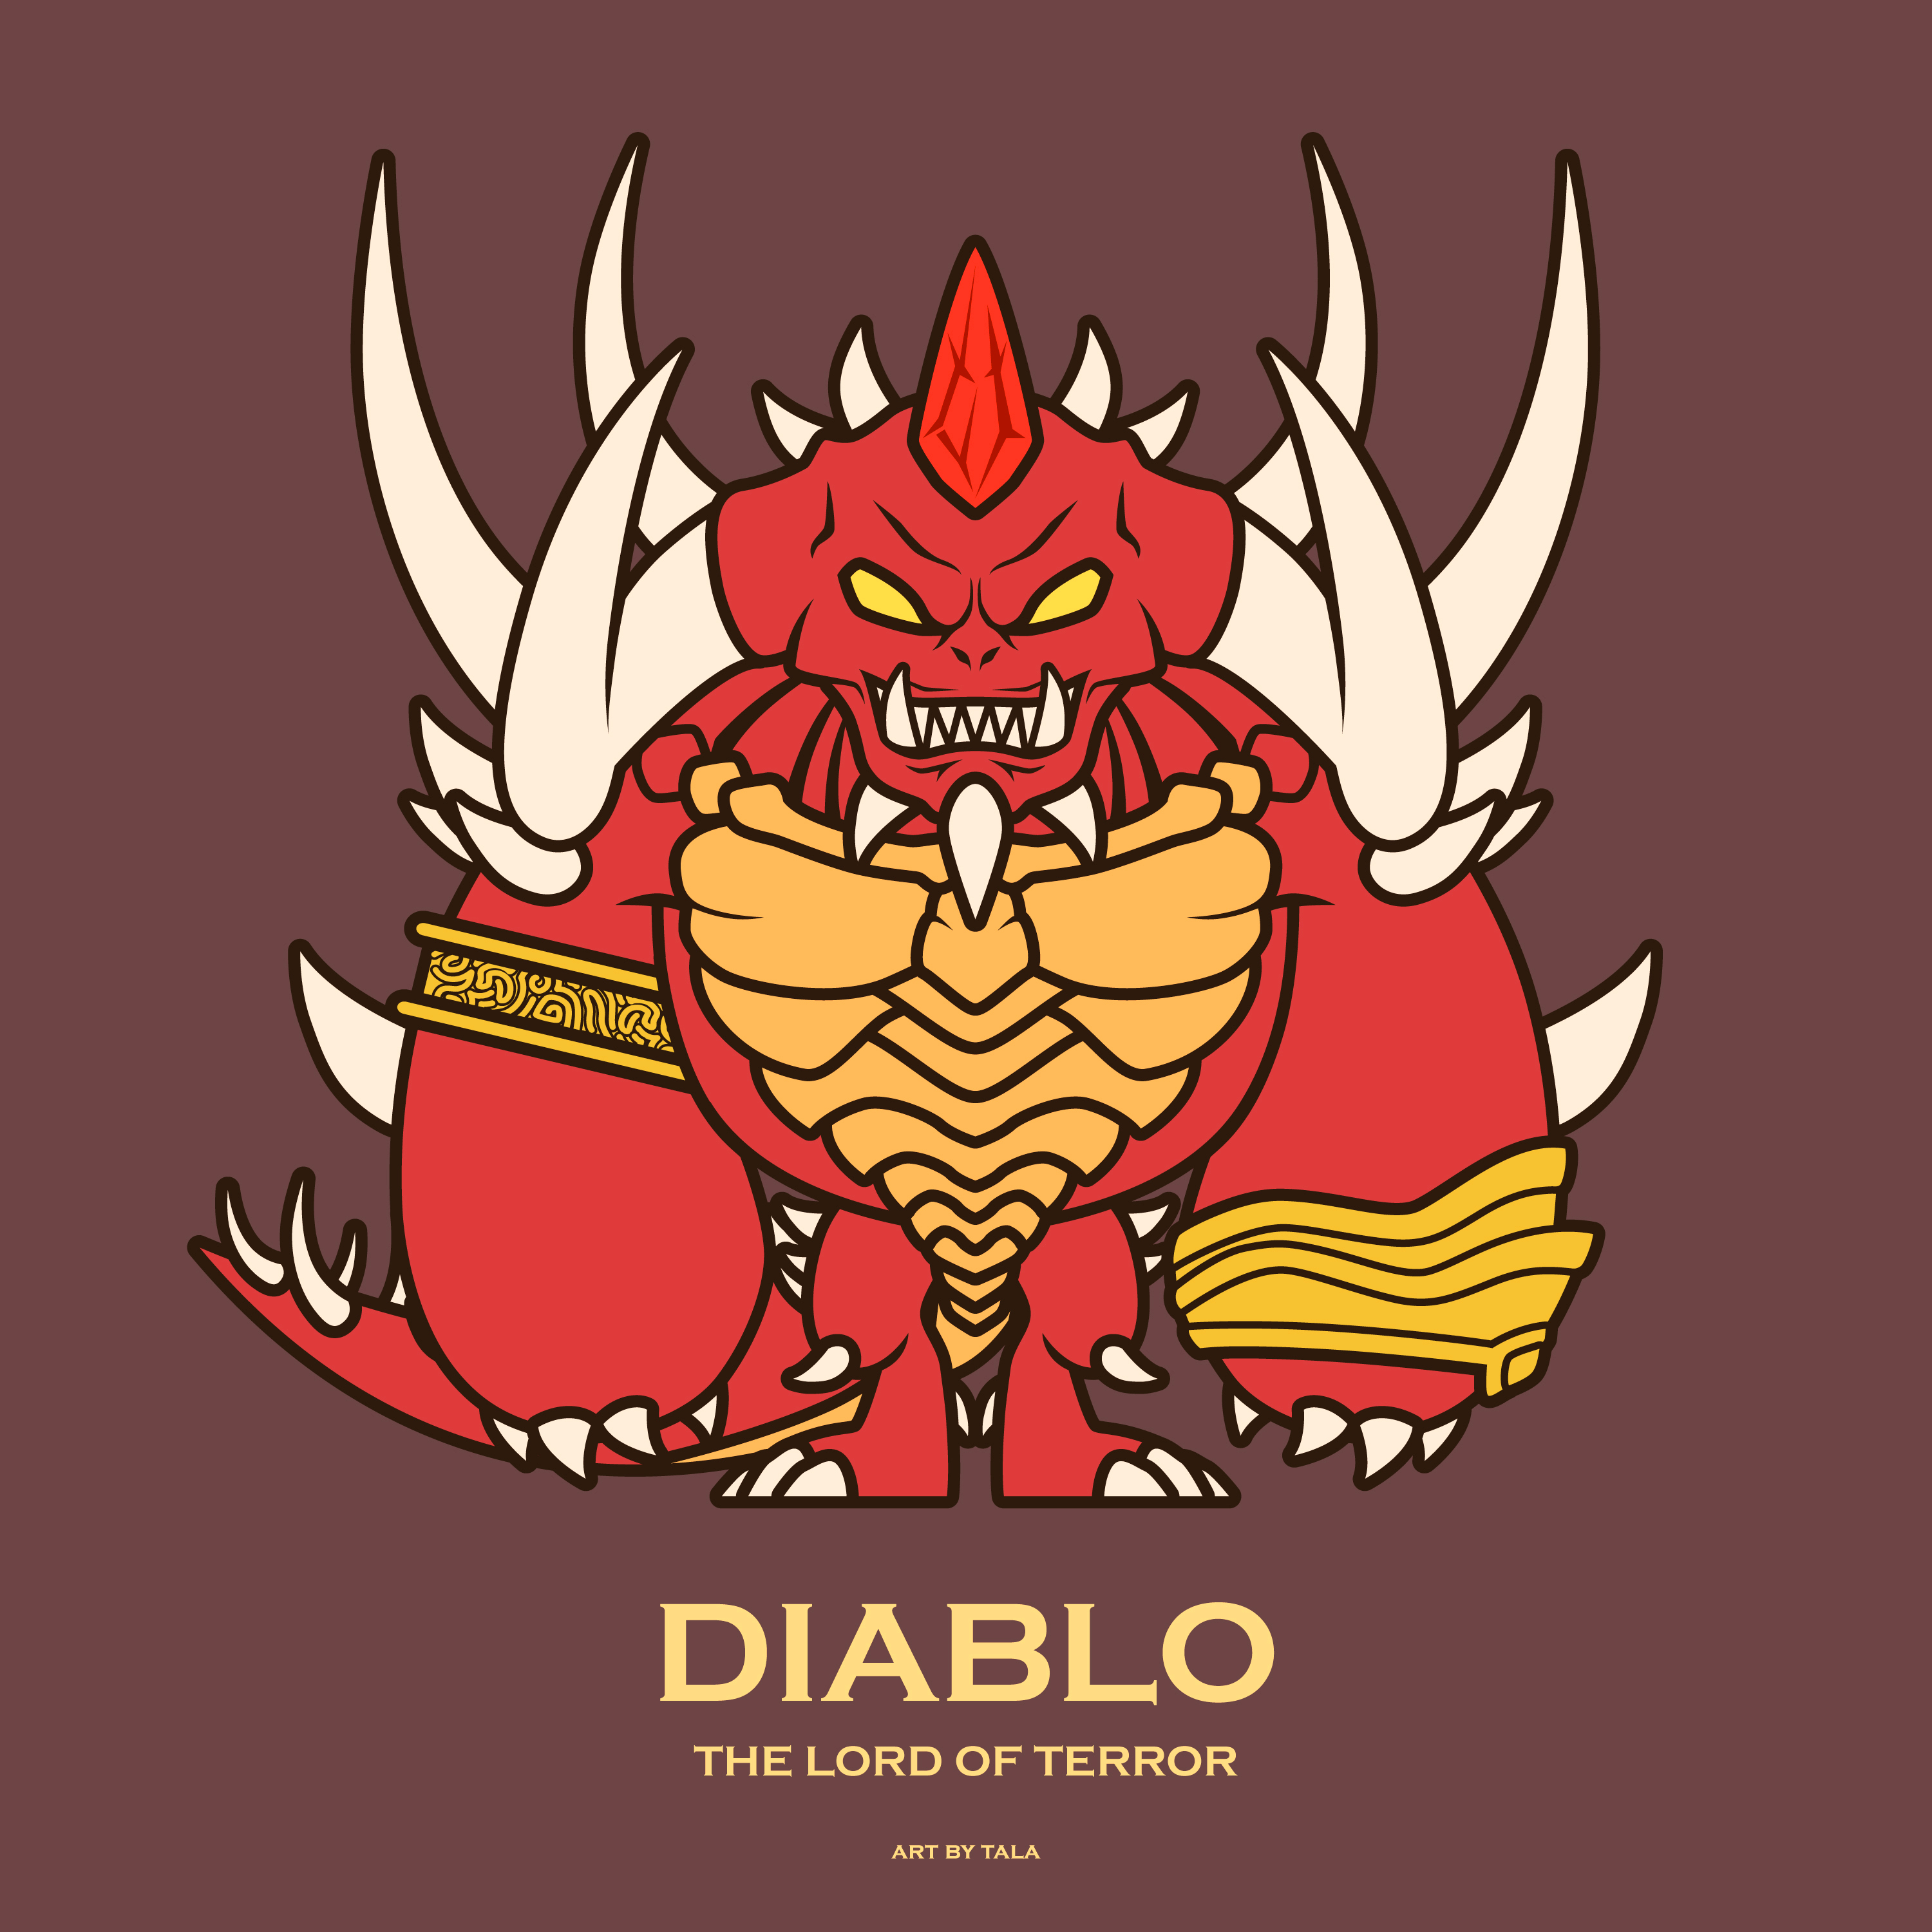 09-Diablo.jpg